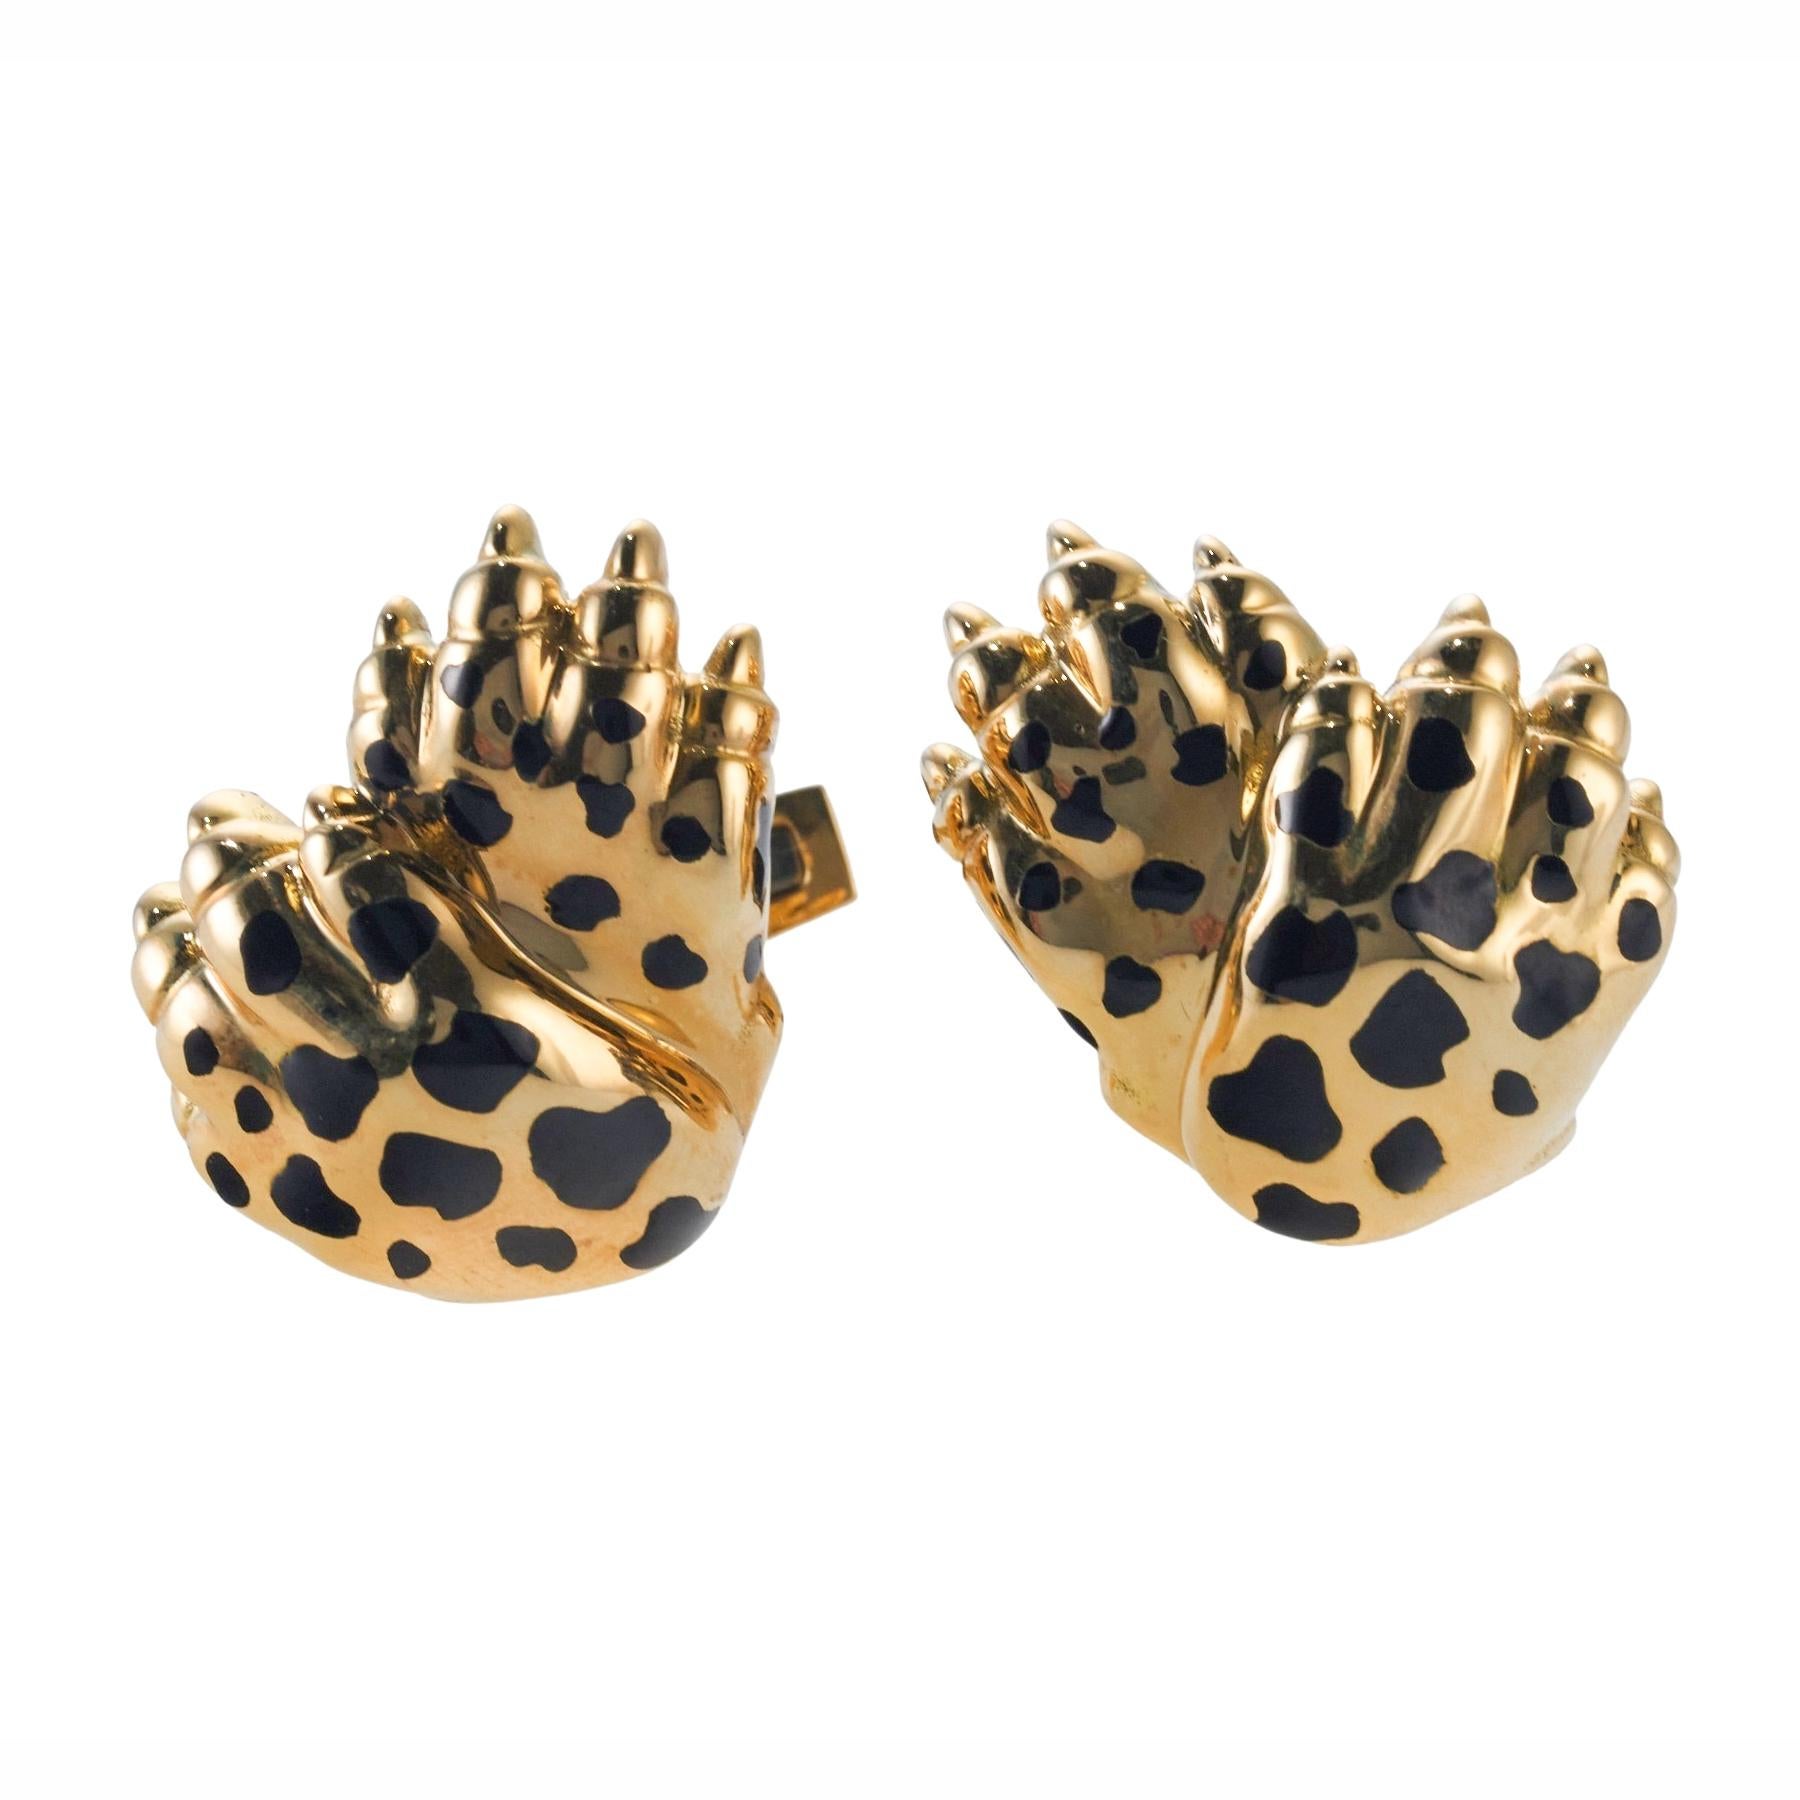 Pair of 18k gold and black enamel leopard claw cufflinks by David Webb. Cufflink top measures 25mm x 26mm. Marked: 18k, David Webb, IJ9. Weight is 43.8 grams.